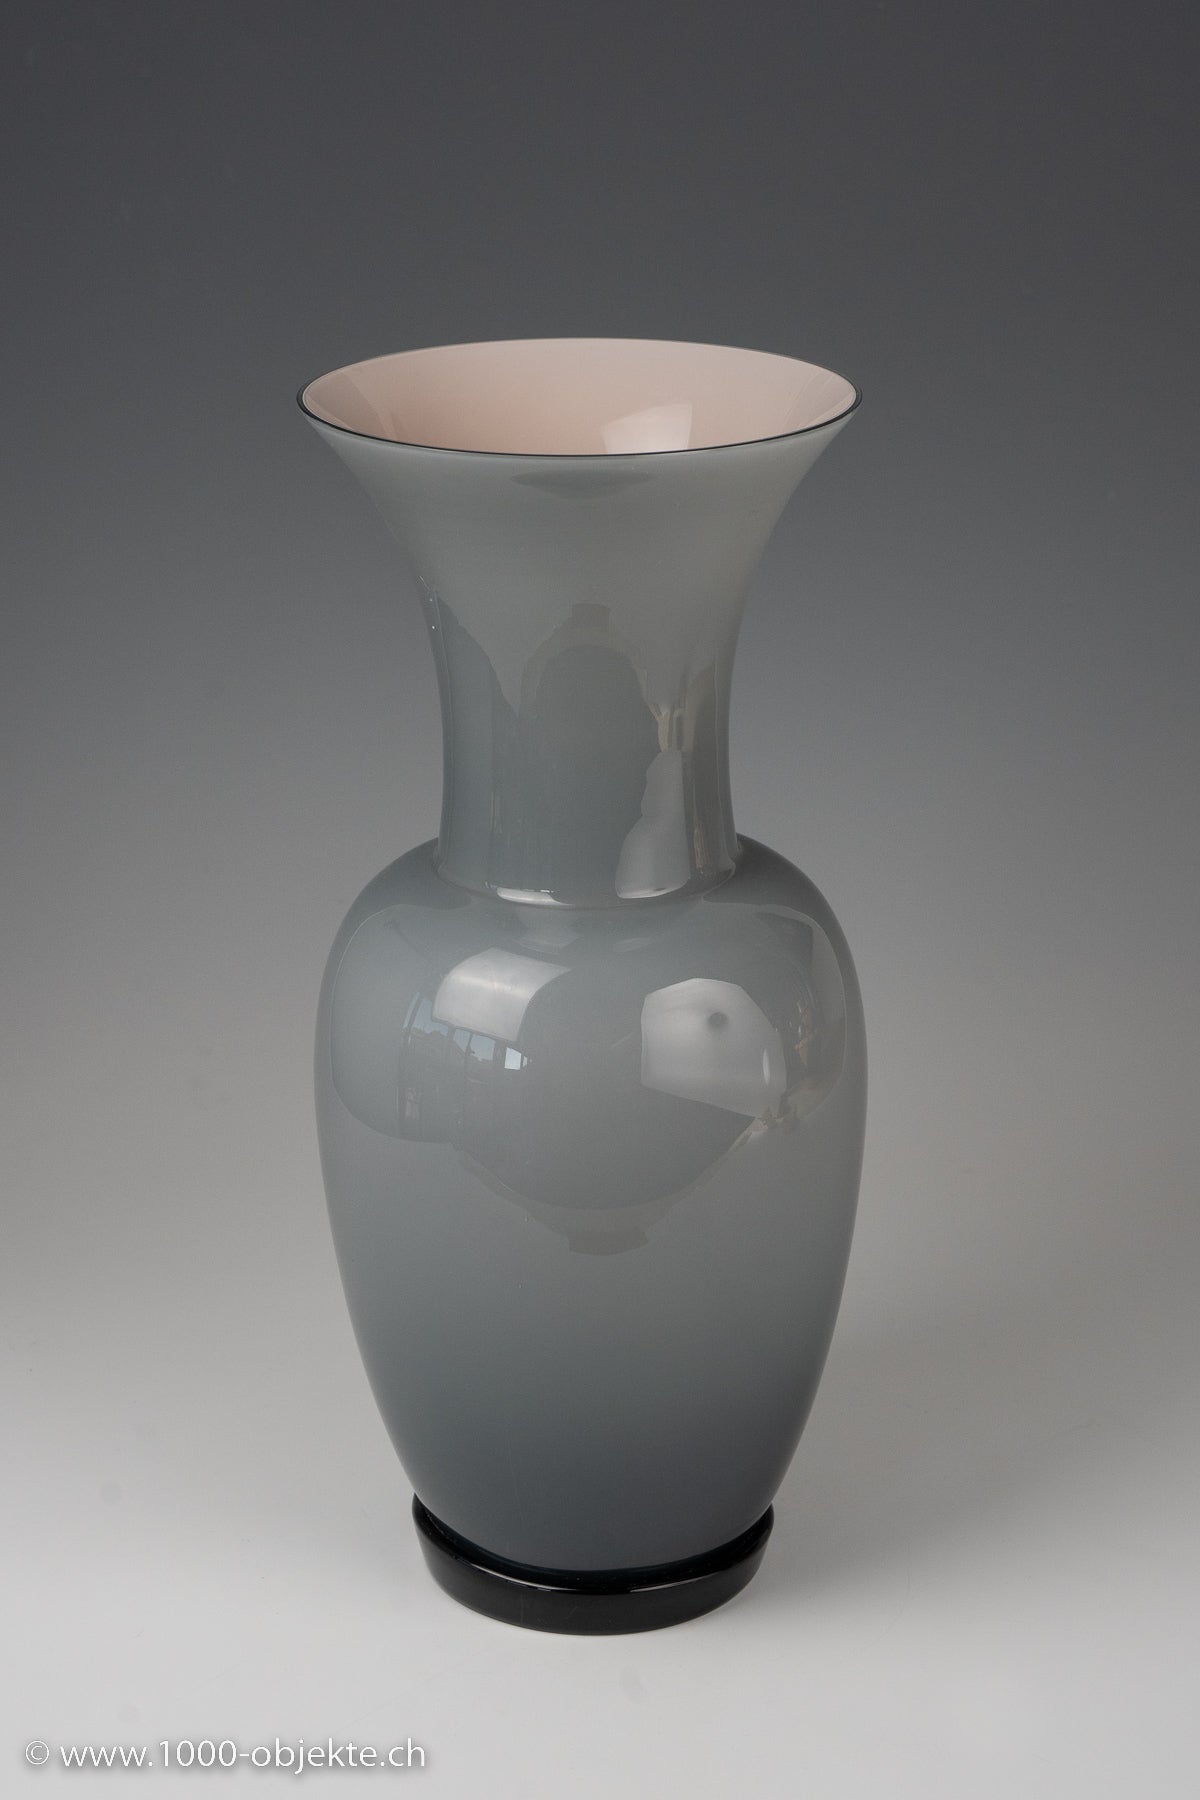 Very large incammiciato vase Murano glass piece gray beige pink black